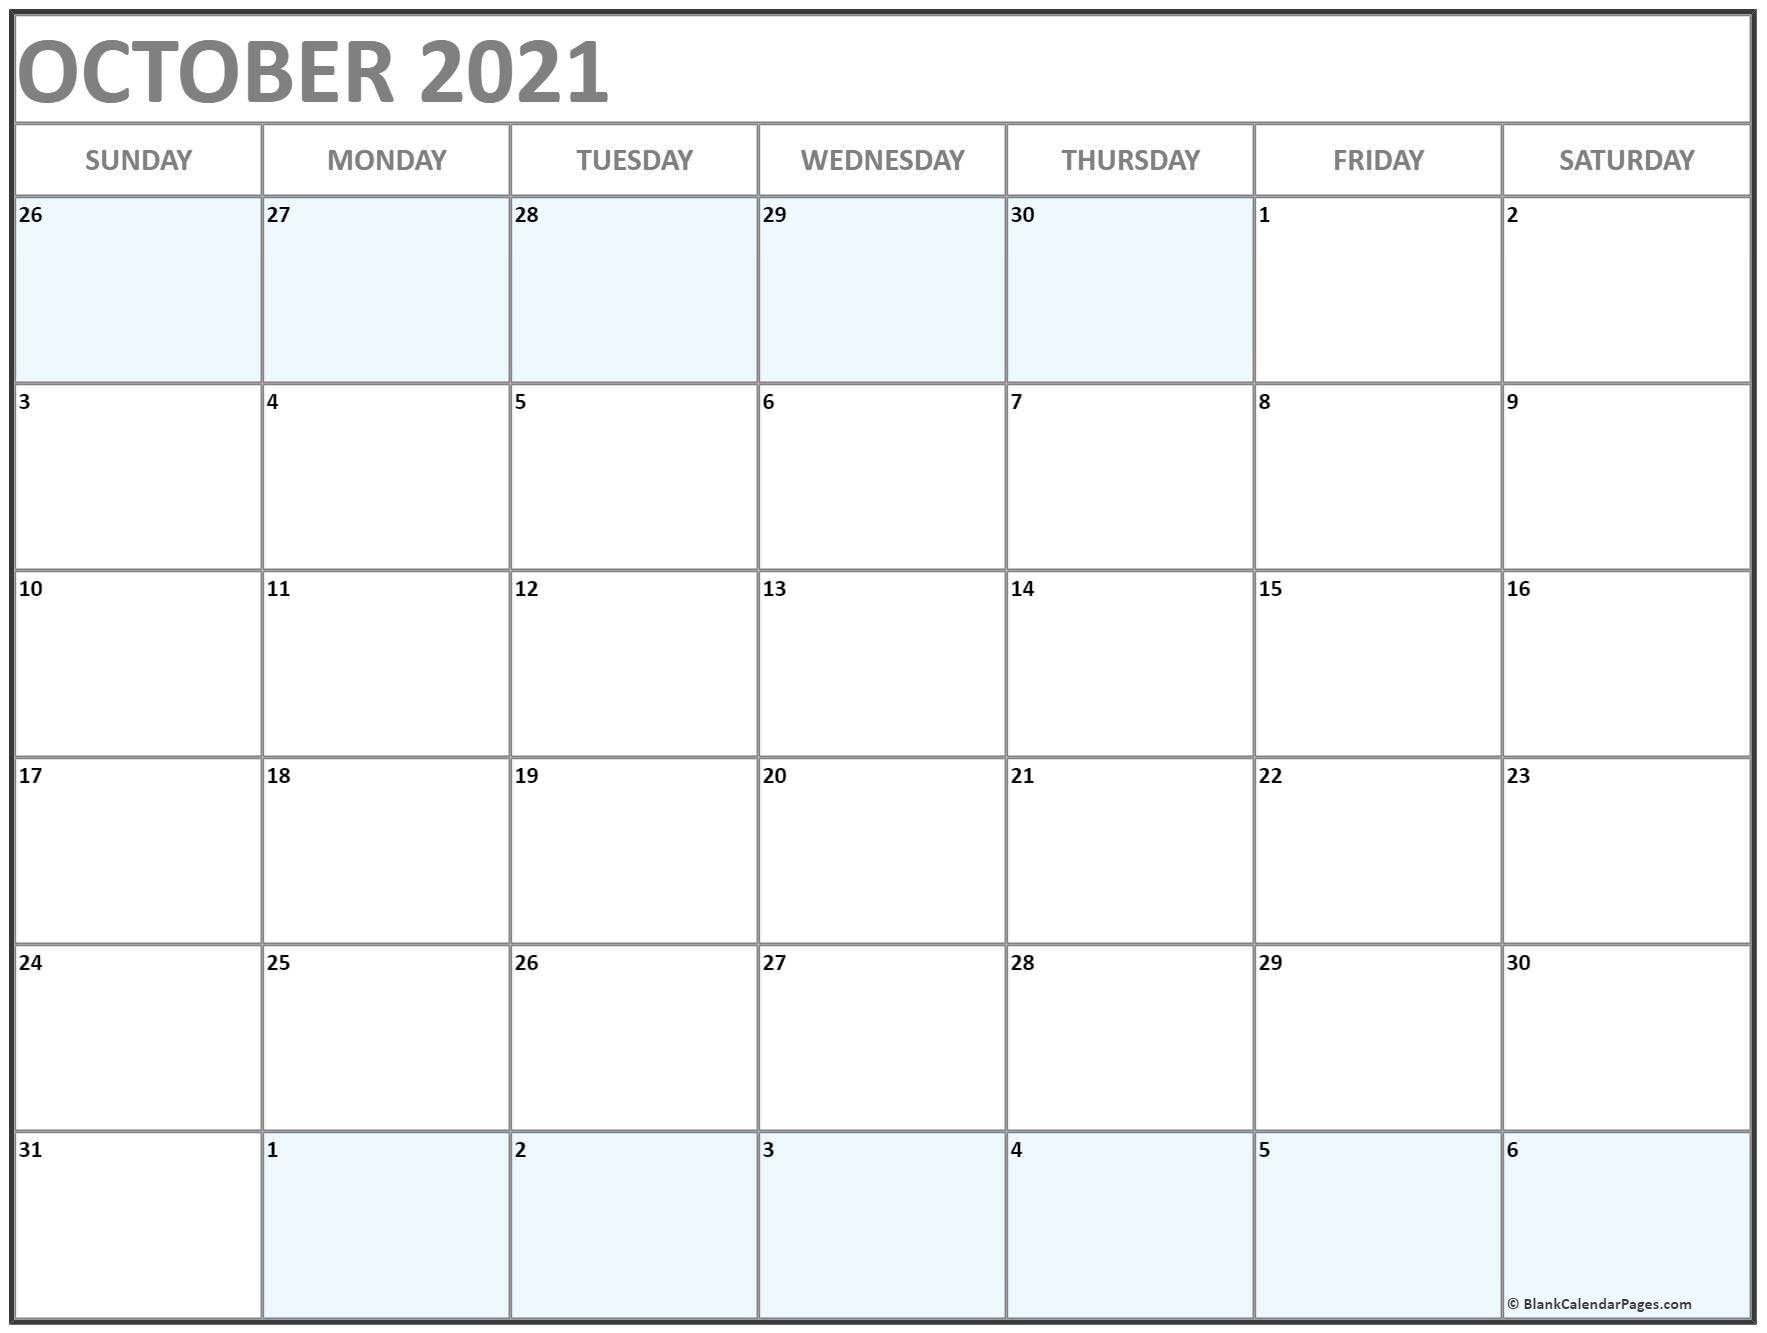 October 2021 Blank Calendar Templates. Blank October 2021 Calendar